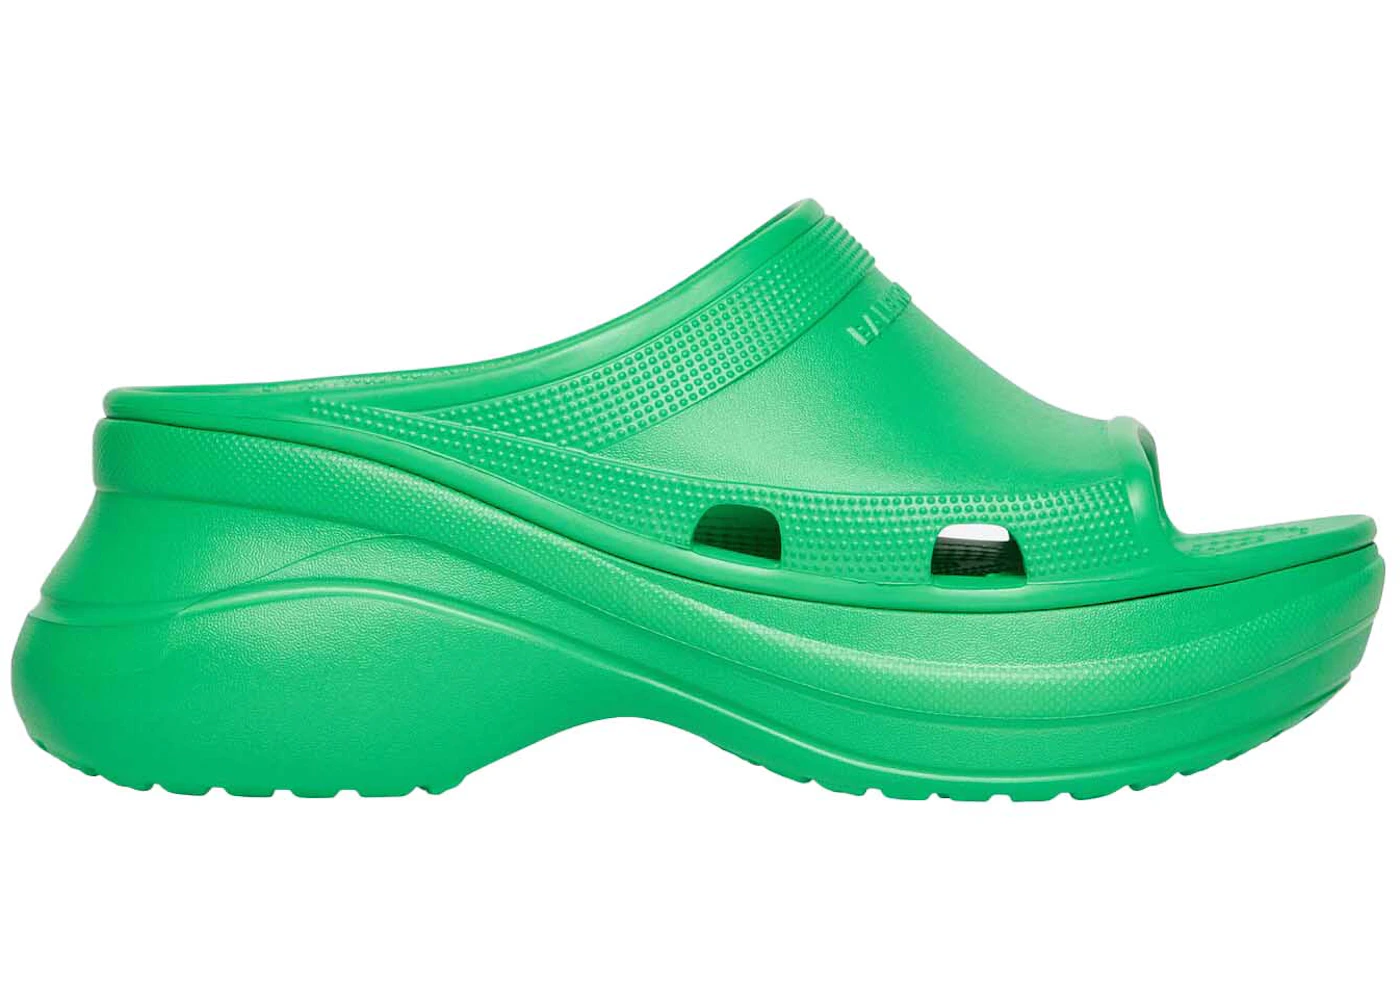 Balenciaga x Crocs Pool Slide Sandals Green (Women's) - 677389W1S8E3033 - US